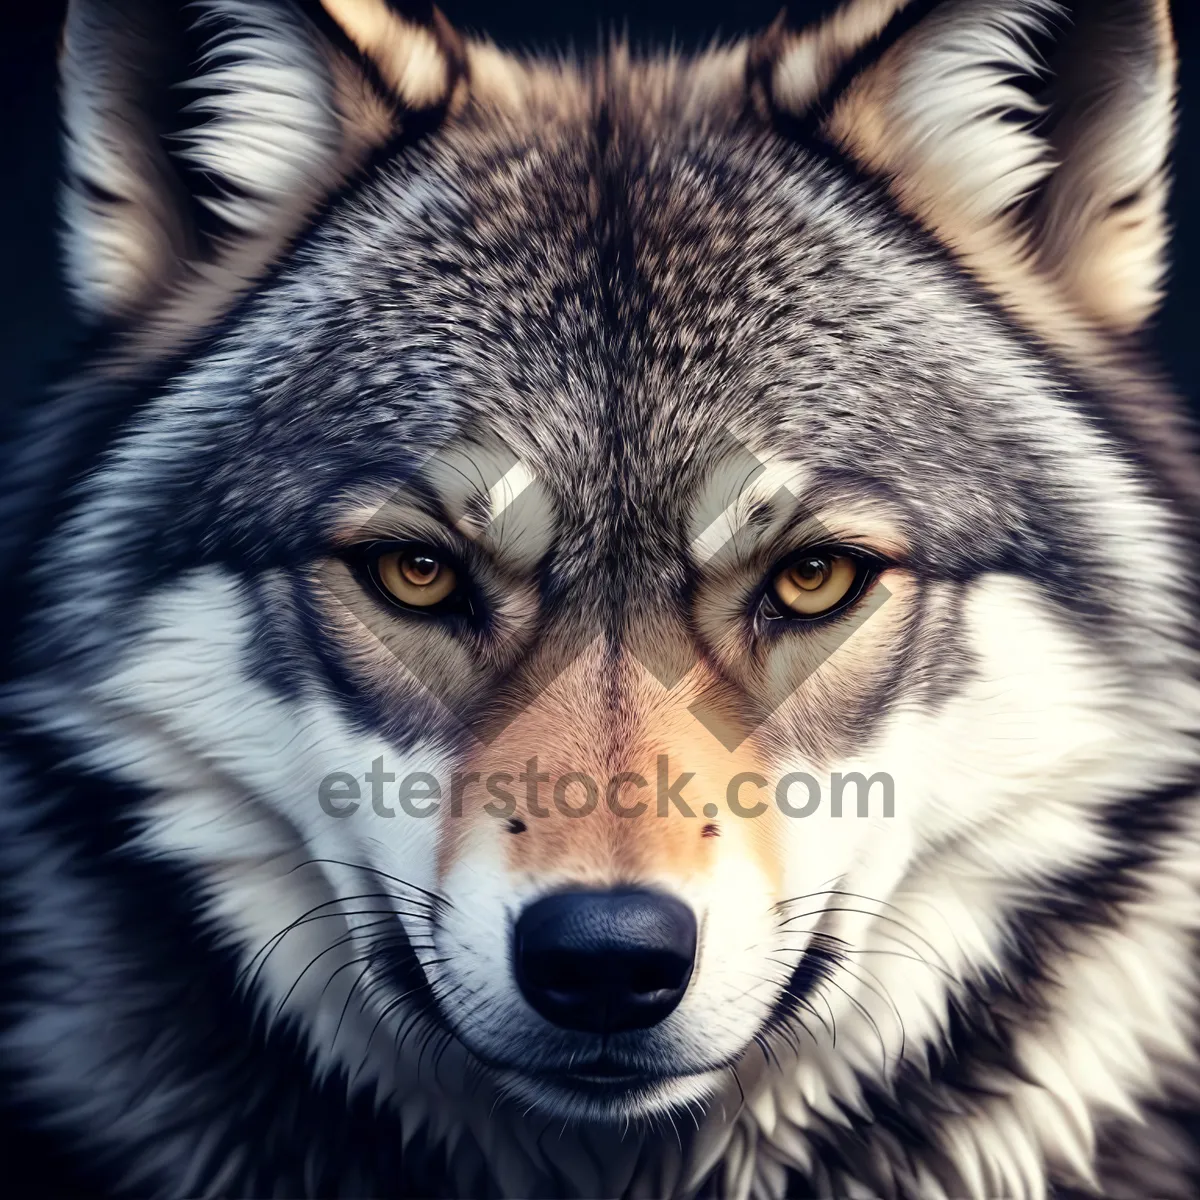 Picture of Majestic Timber Wolf showcasing fierce gaze and beautiful fur.